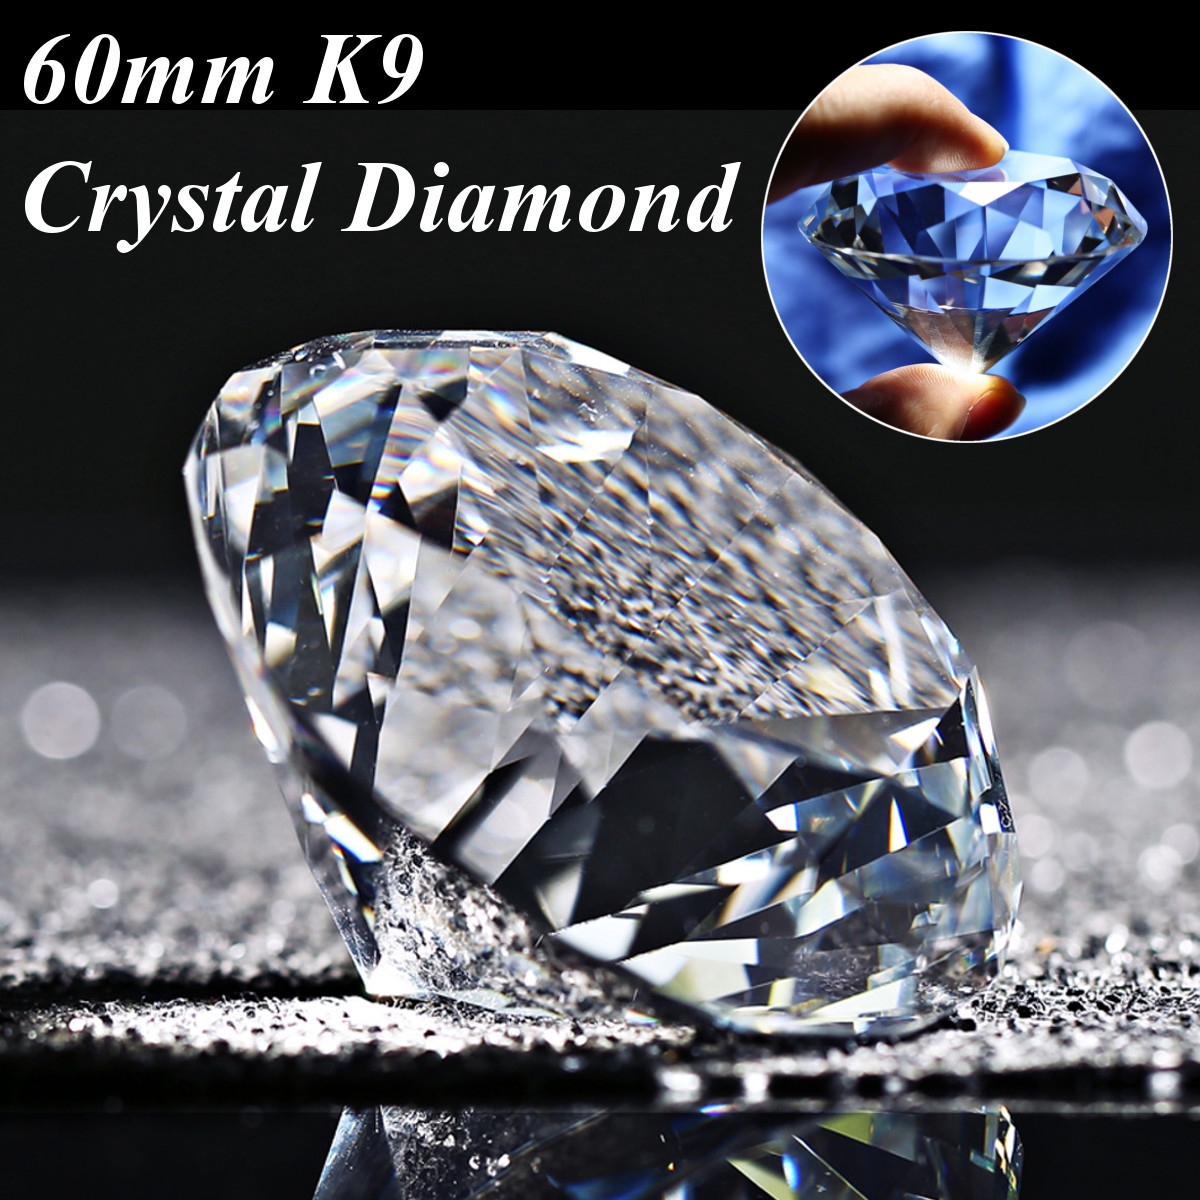 Clear Big 60mm K9 Crystal Diamond Glass Art Paperweight Decor Ornament Tableware 